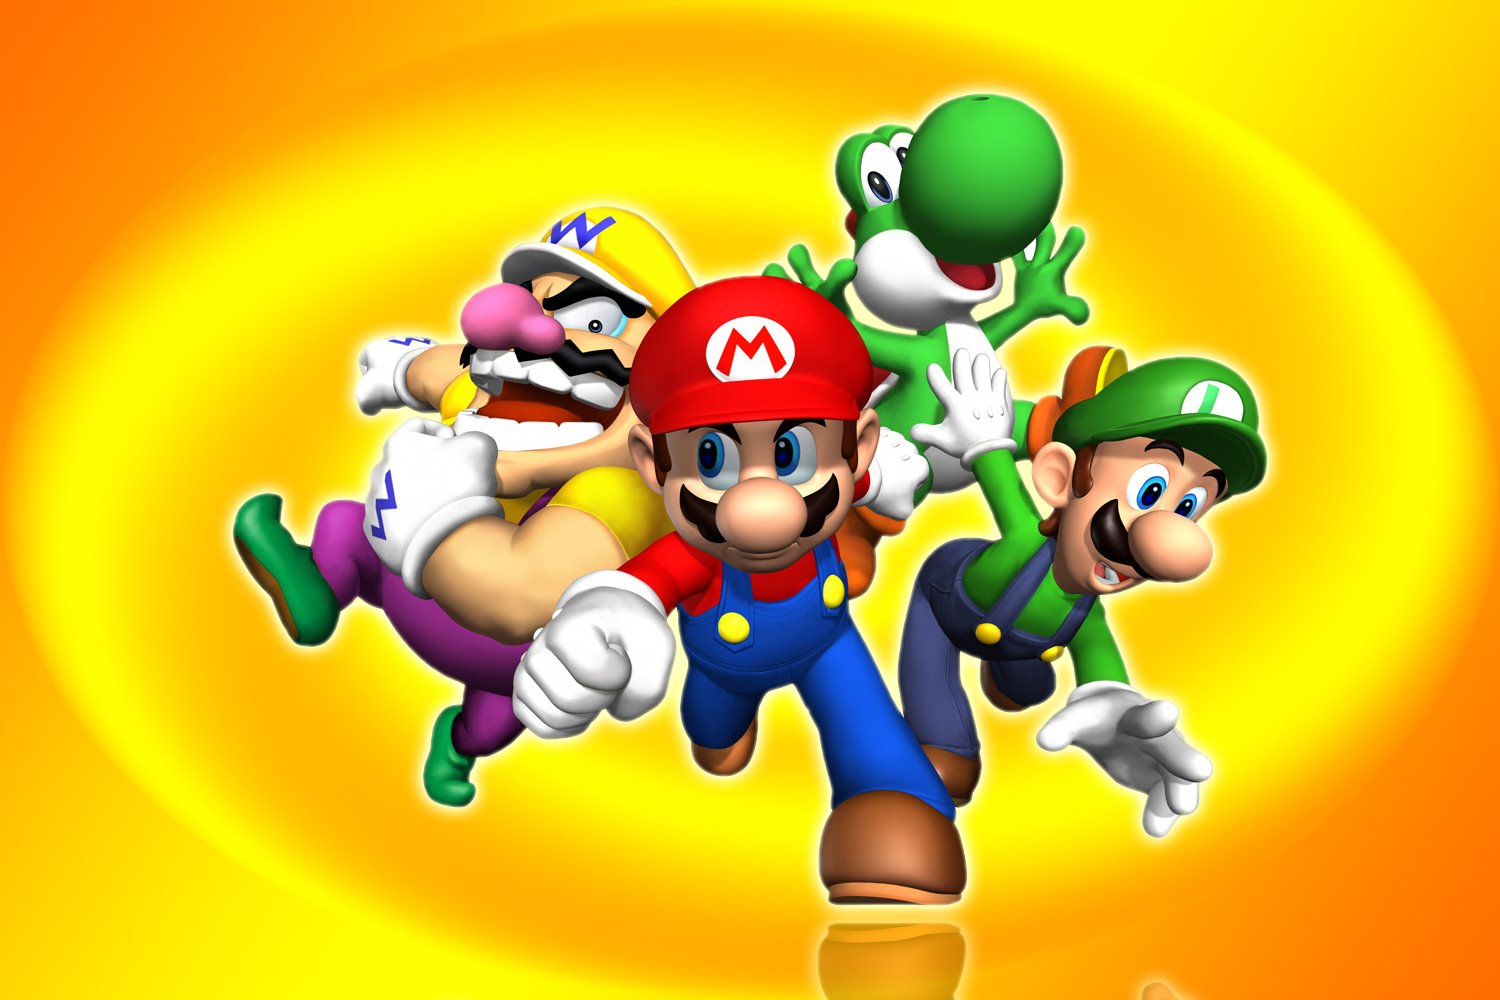 Включи супер марио бразерс. Супер Марио супермарио. Супер Марио герои игры. Марио (персонаж игр). Супер братья Марио игра.